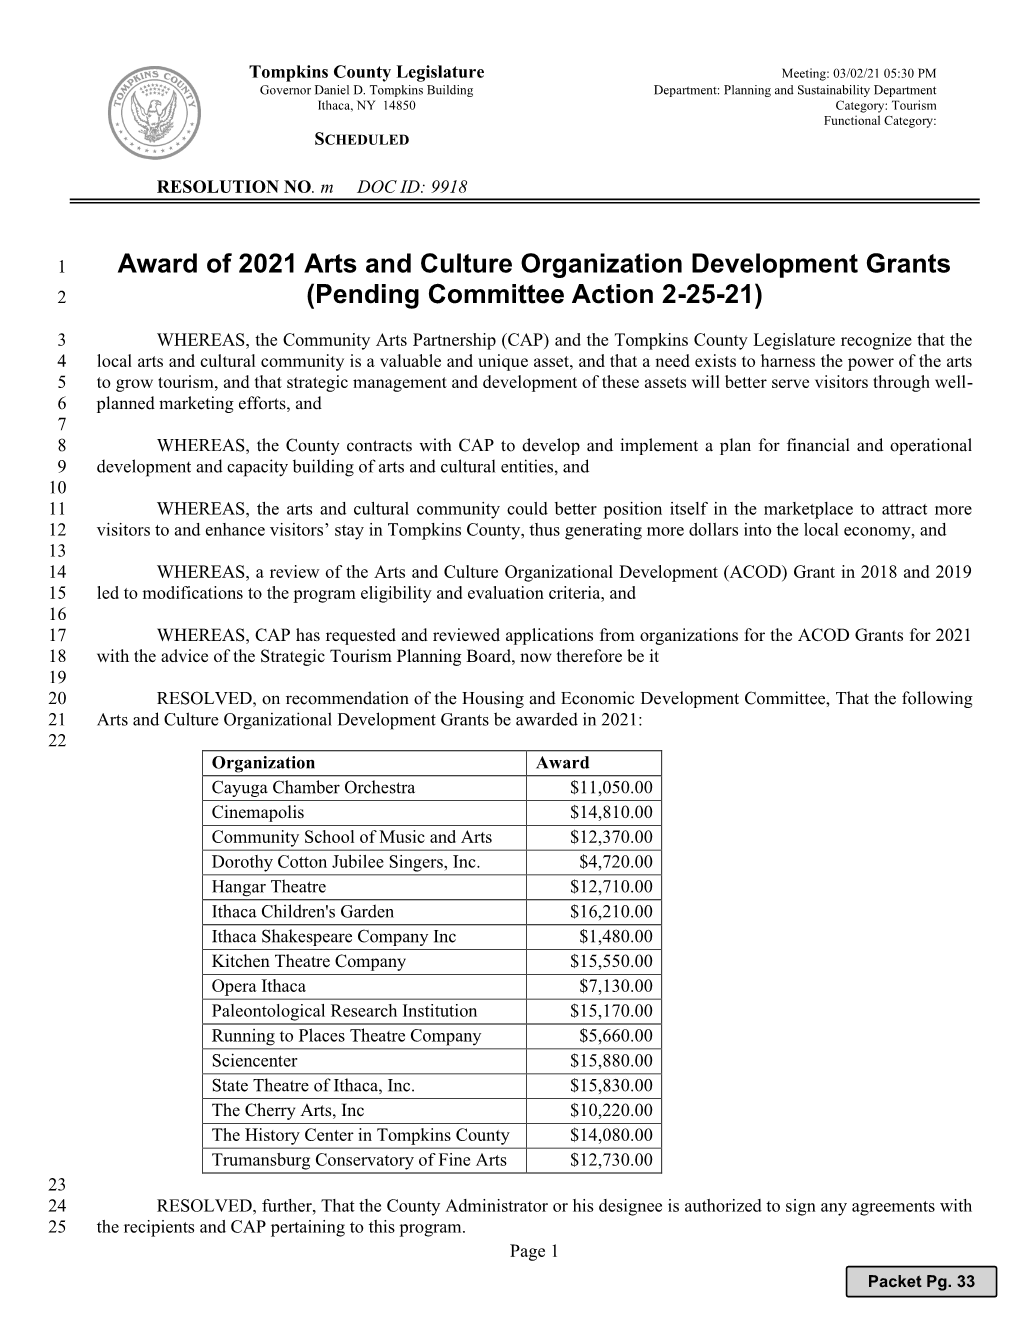 2021 Arts and Culture Organizational Development Grants